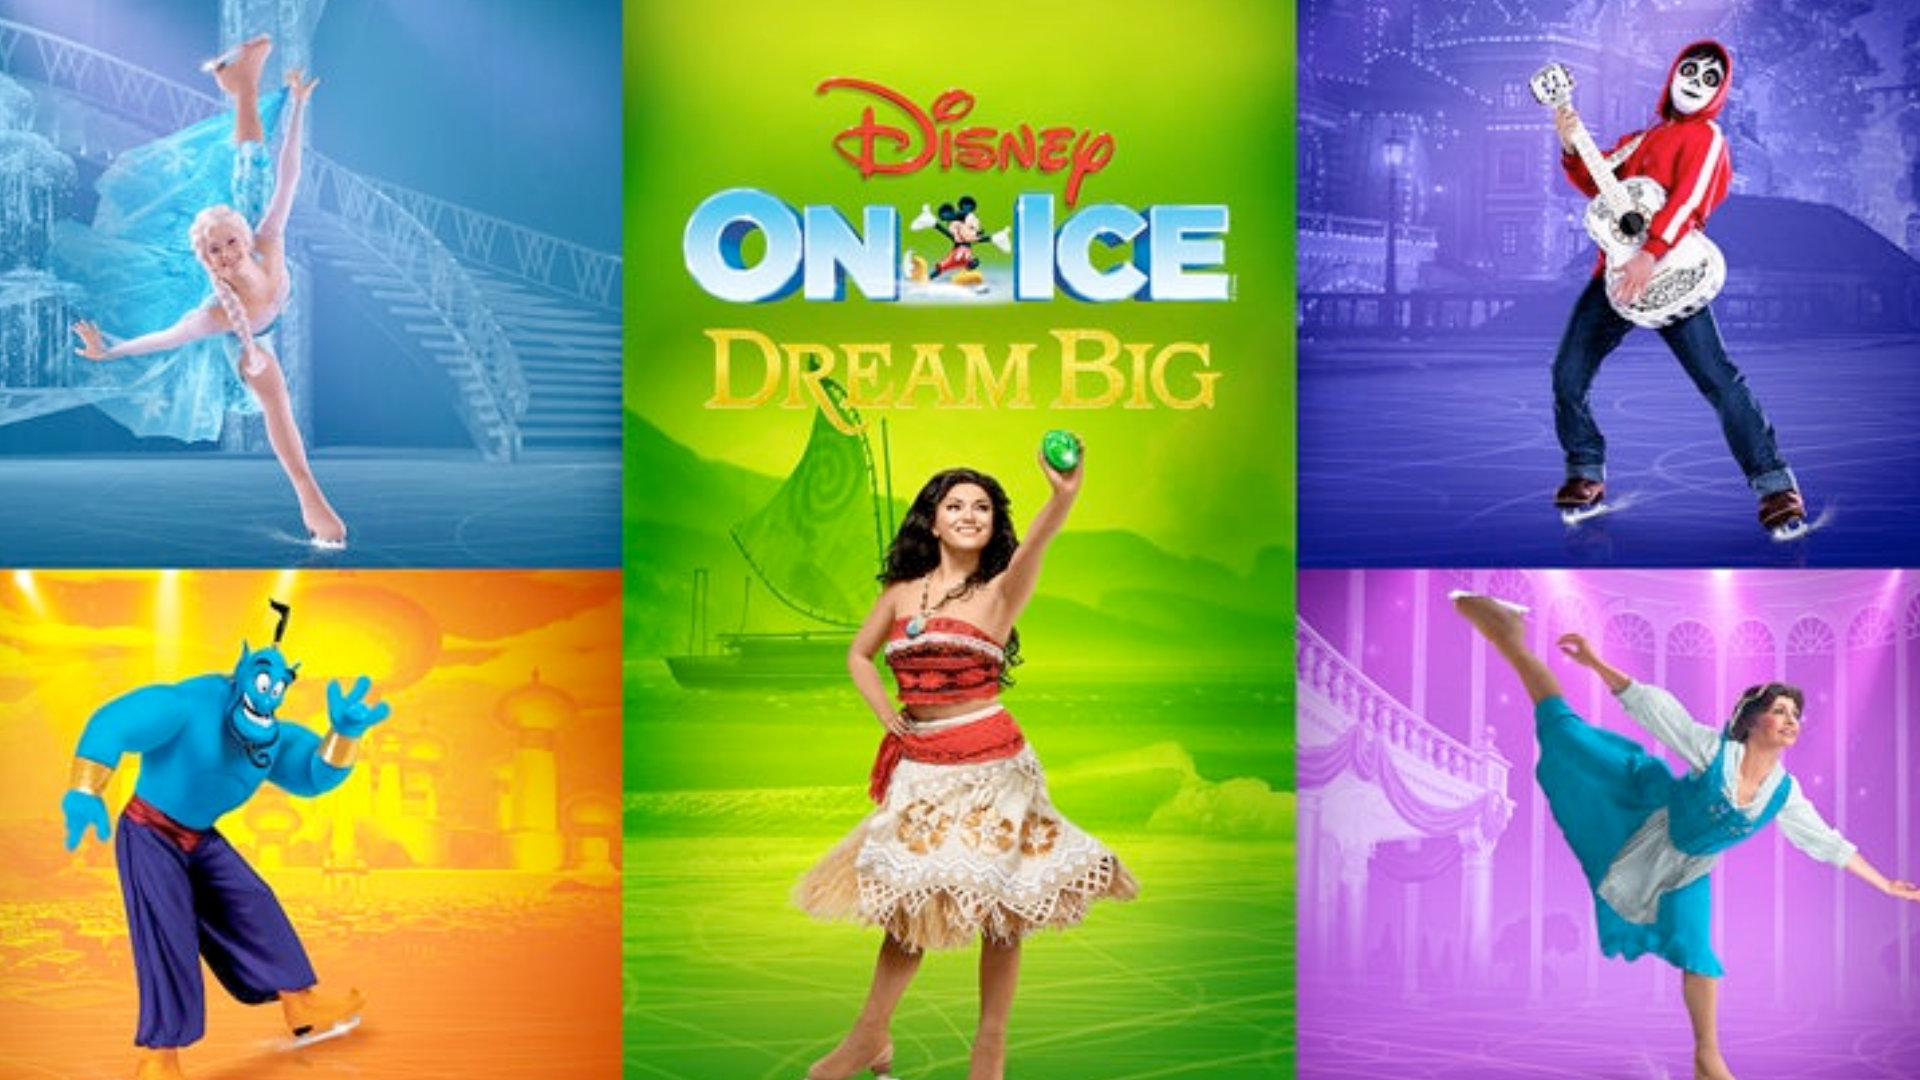 Disney On Ice Dream Big